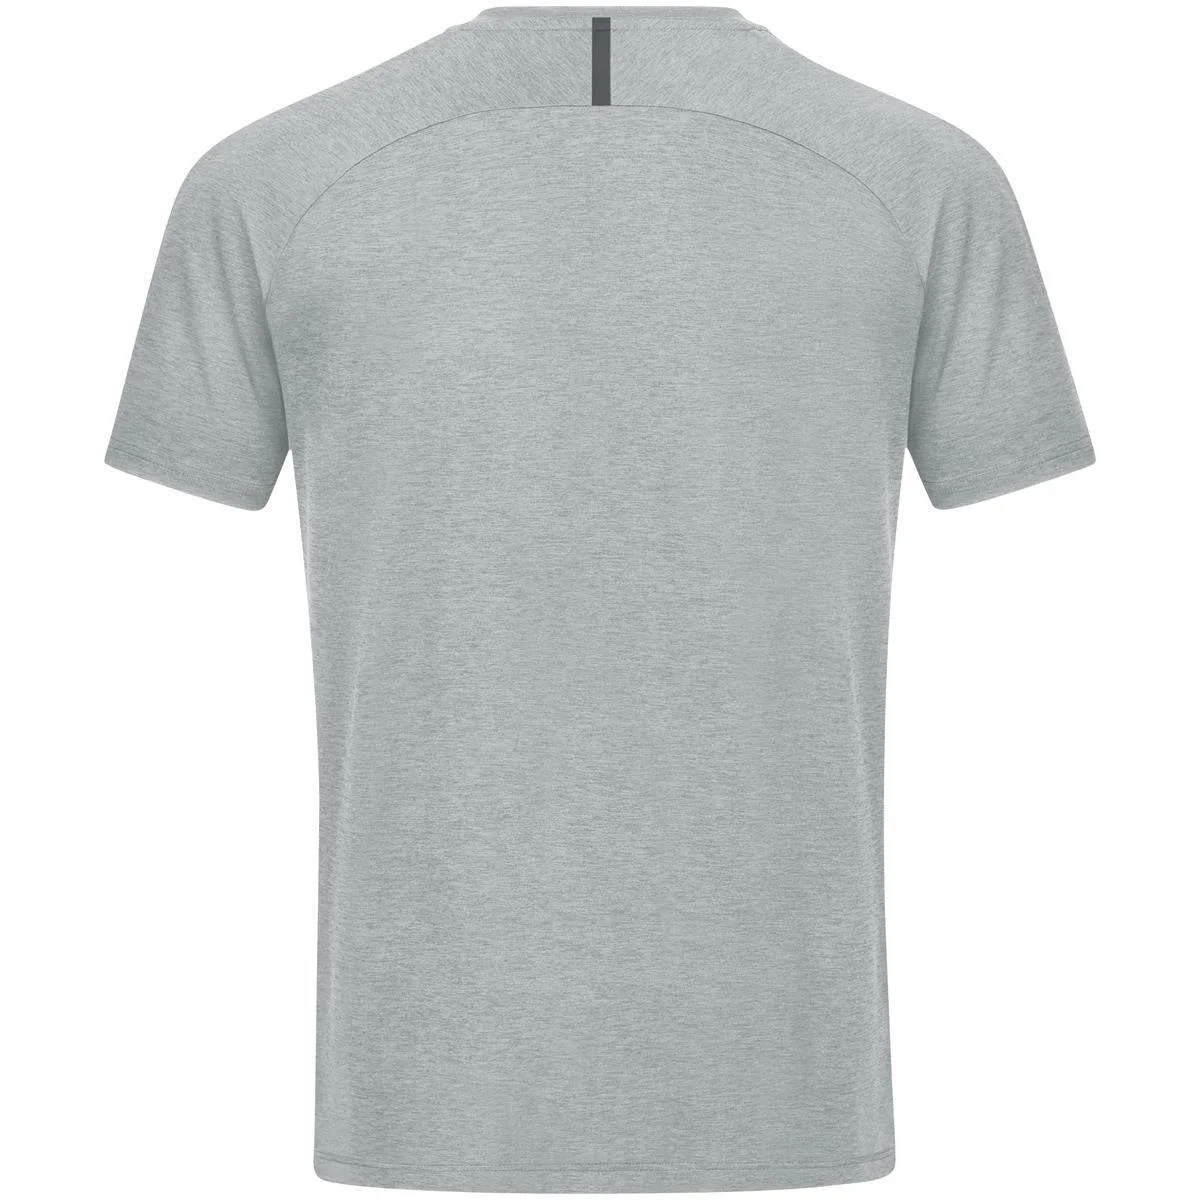 JAKO Herren T-Shirt Challenge, hellgrau meliert/anthrazit light, Gr.M